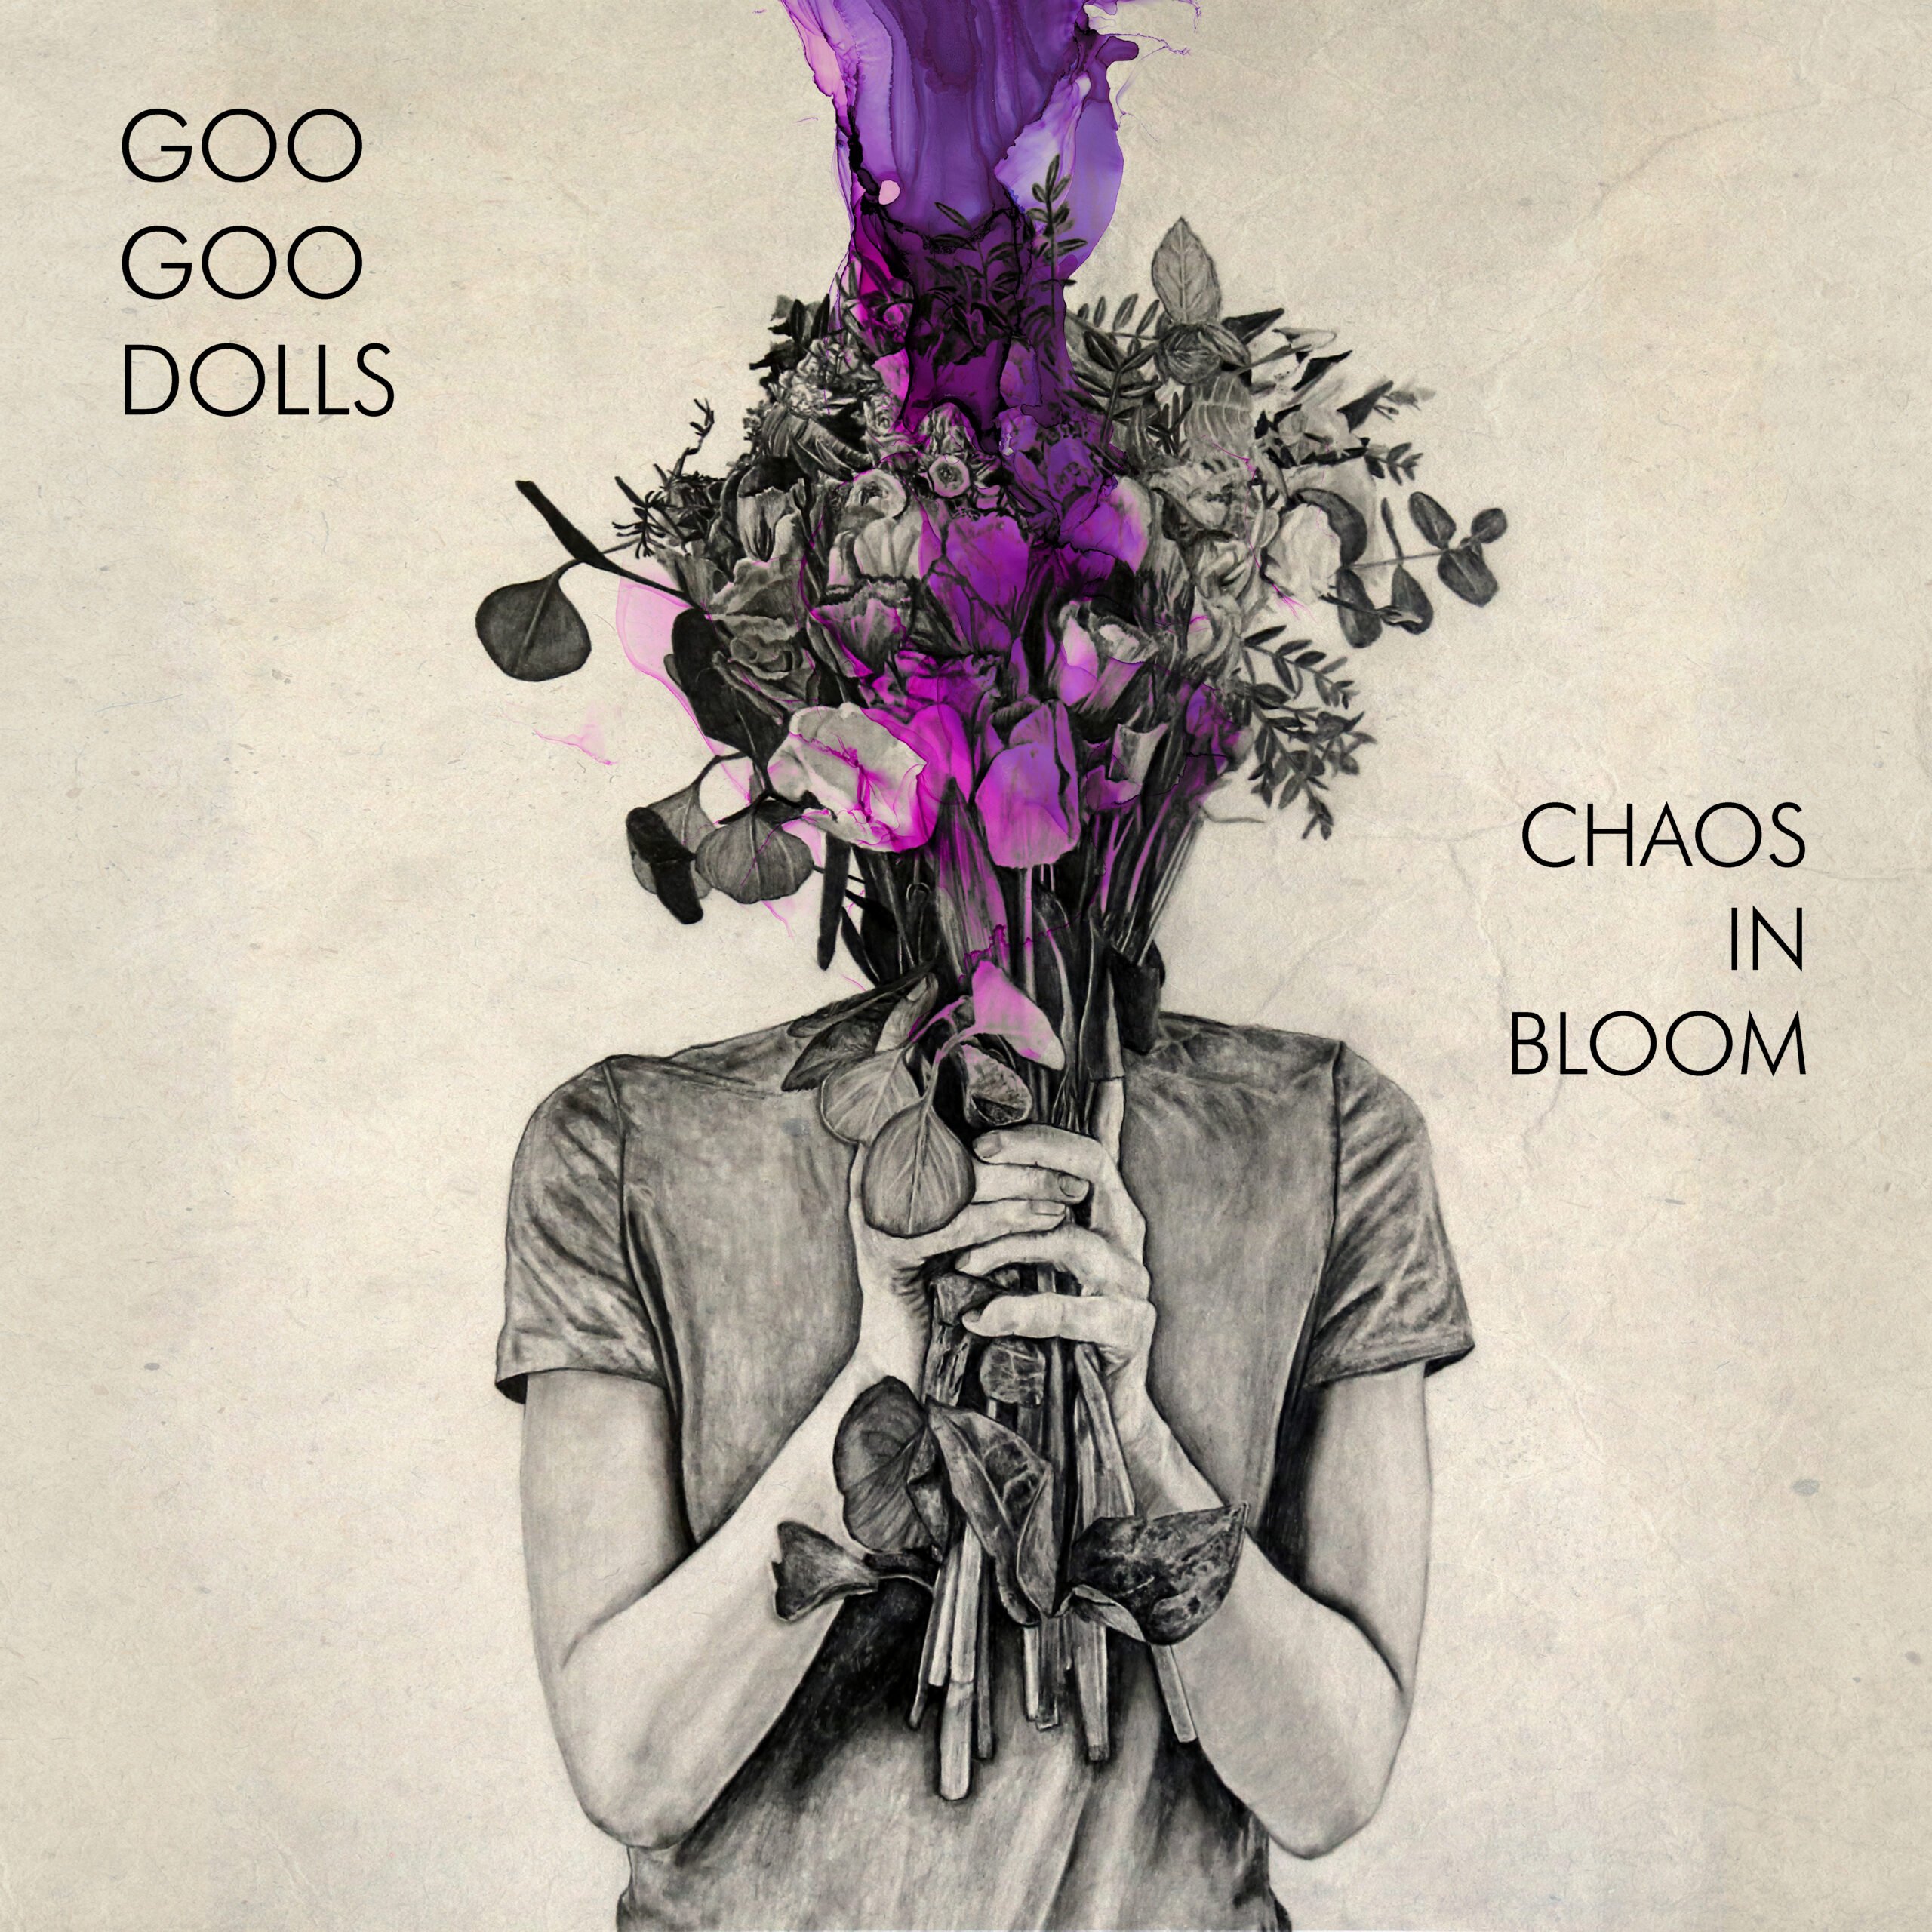 Goo Goo Dolls Chaos in Bloom cover artwork